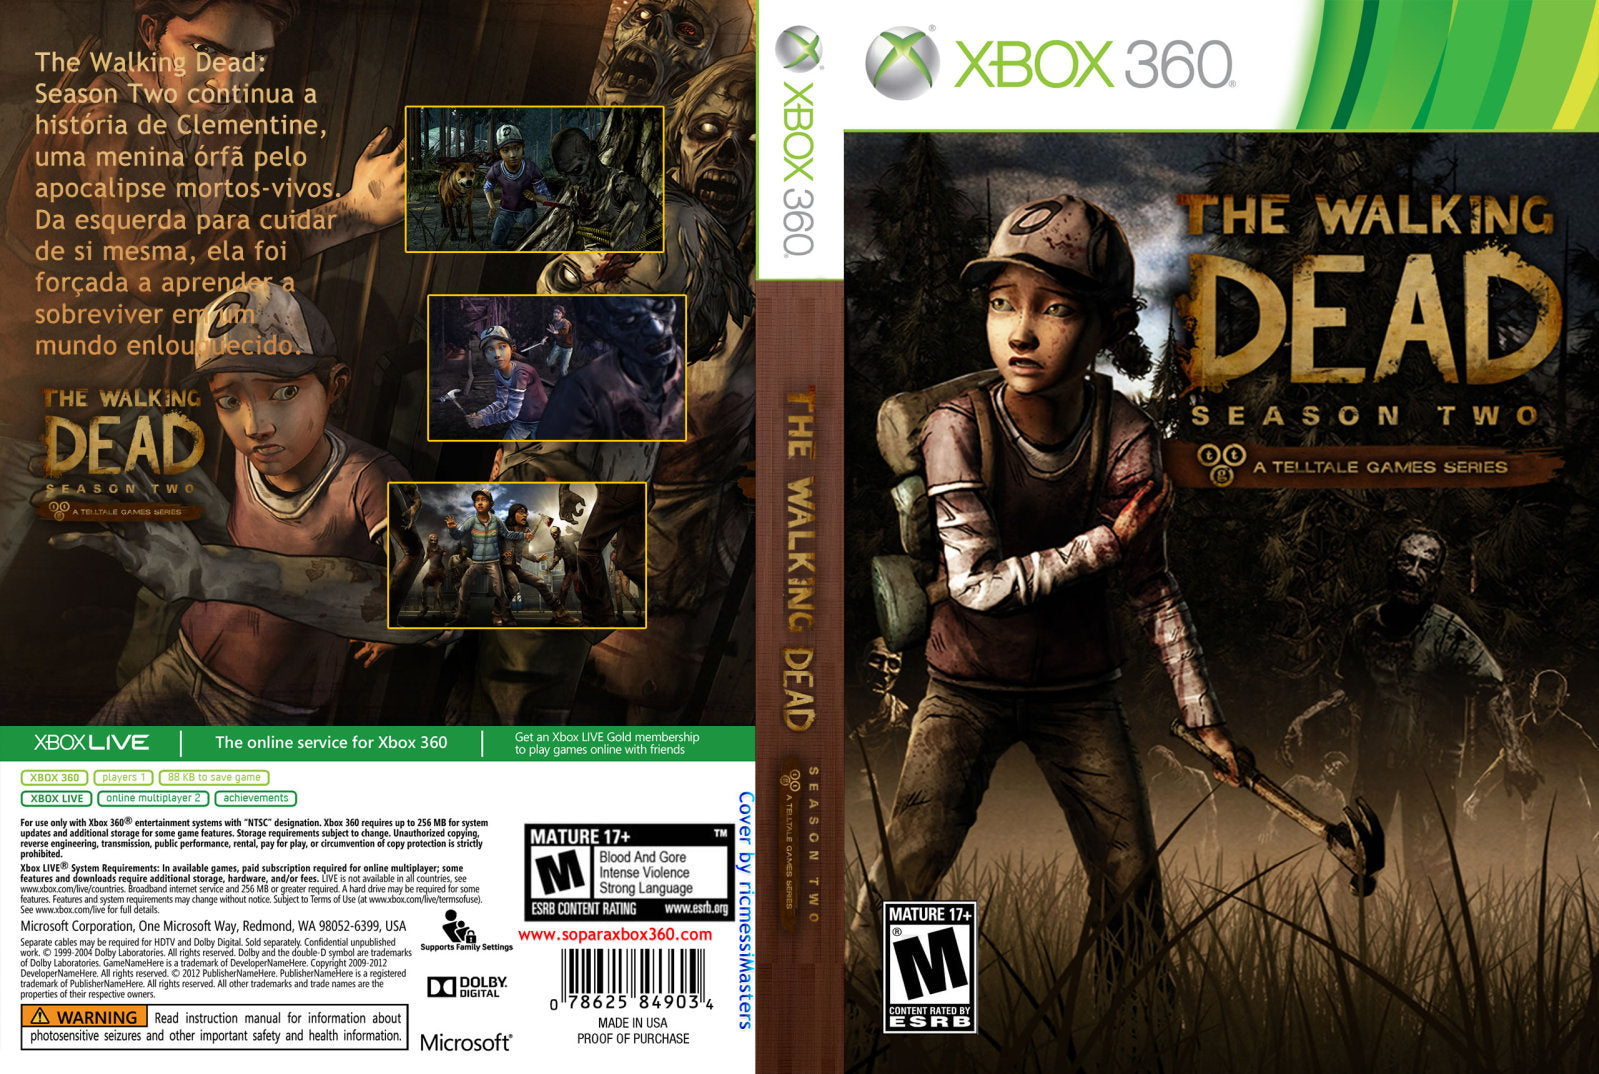 Jogo The Walking Dead - Season Two Xbox 360 Física Original